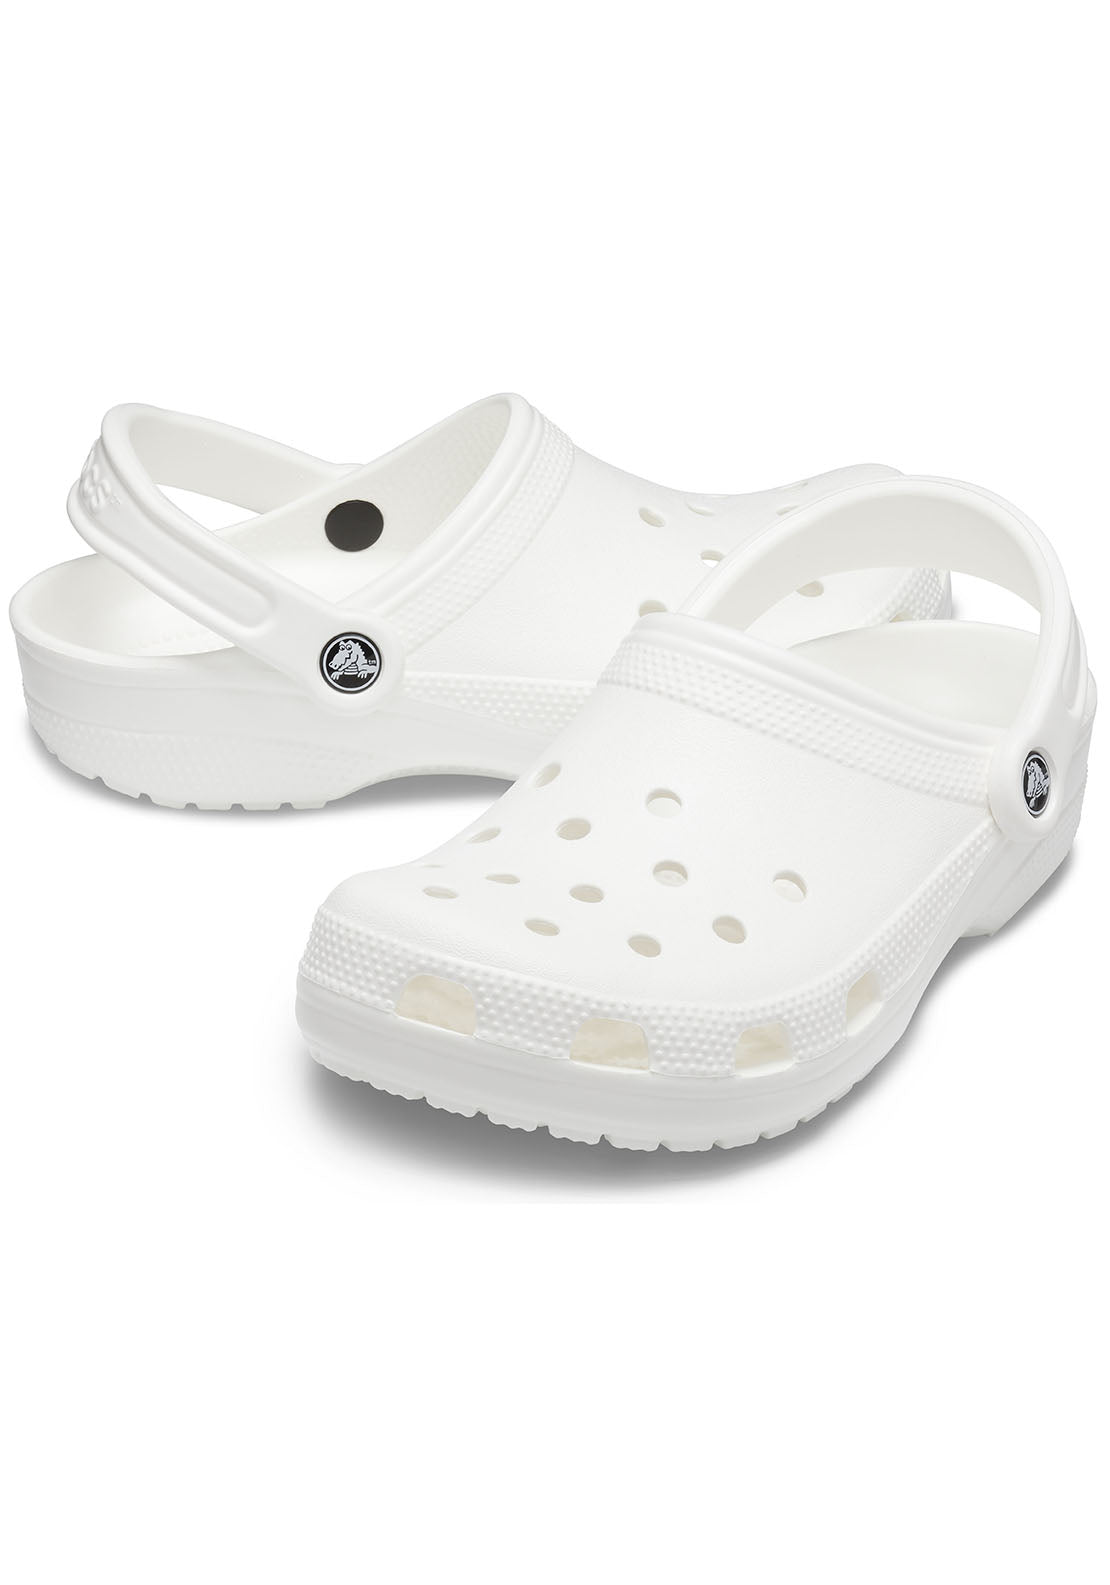 Crocs Classic Clog - White 1 Shaws Department Stores